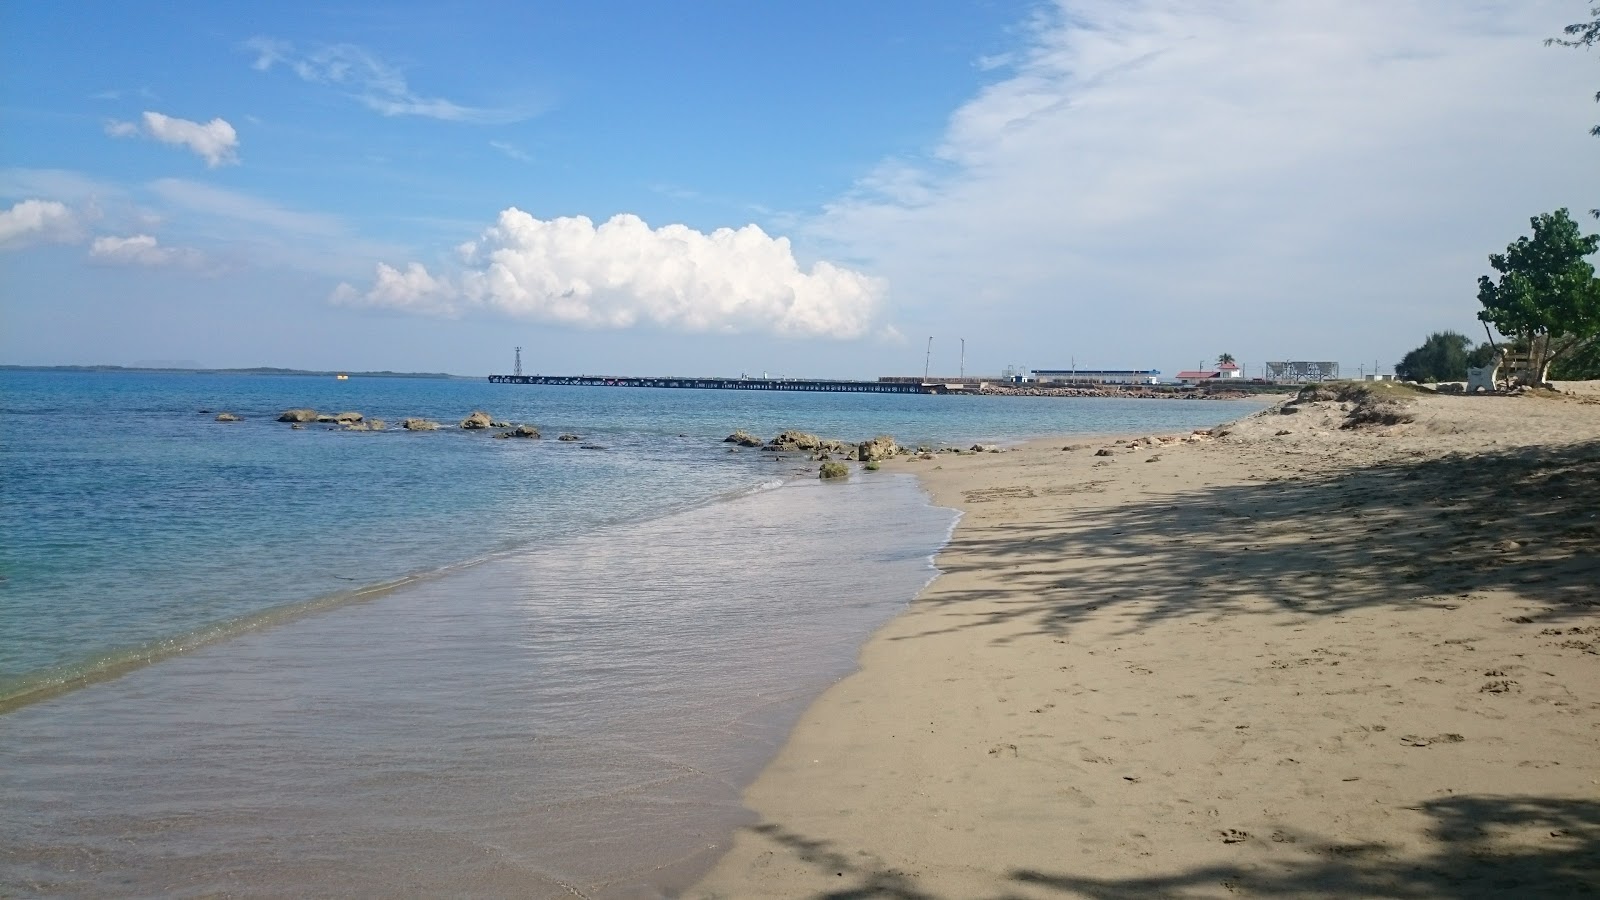 Playa Los Coquitos'in fotoğrafı geniş plaj ile birlikte